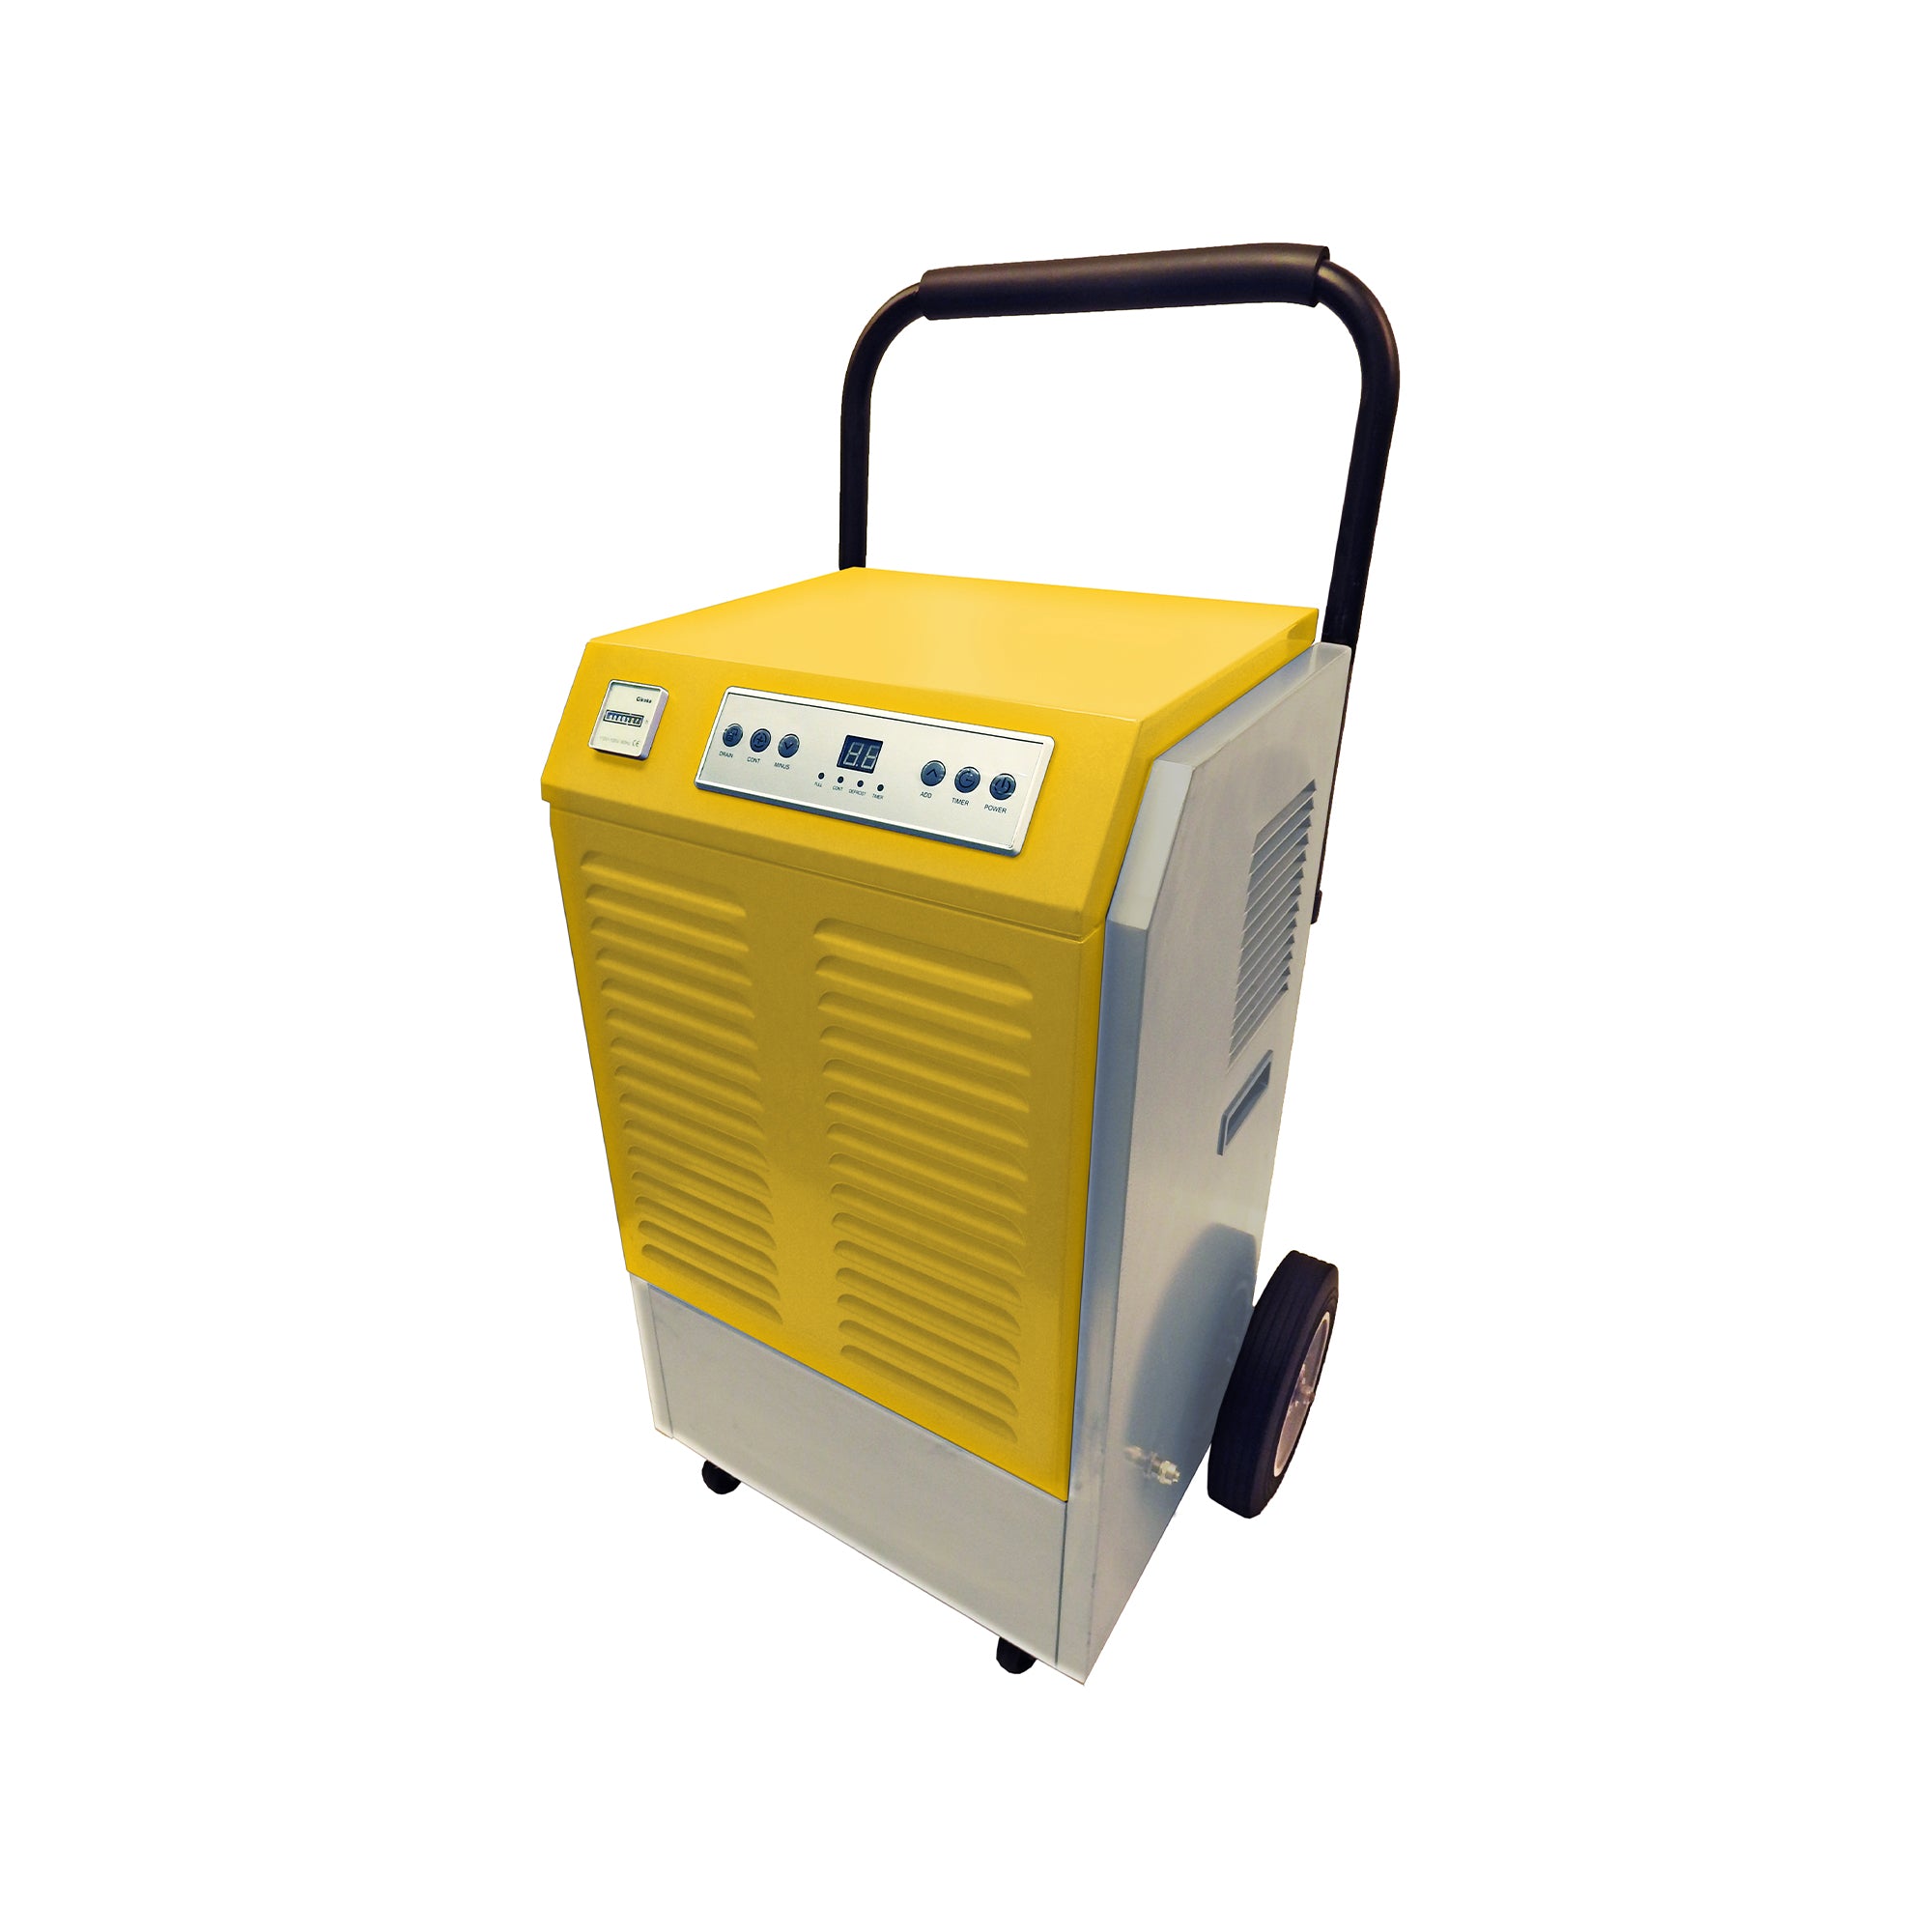 RDHC-190P, 190 Pint Commercial Dehumidifier, Pump Function